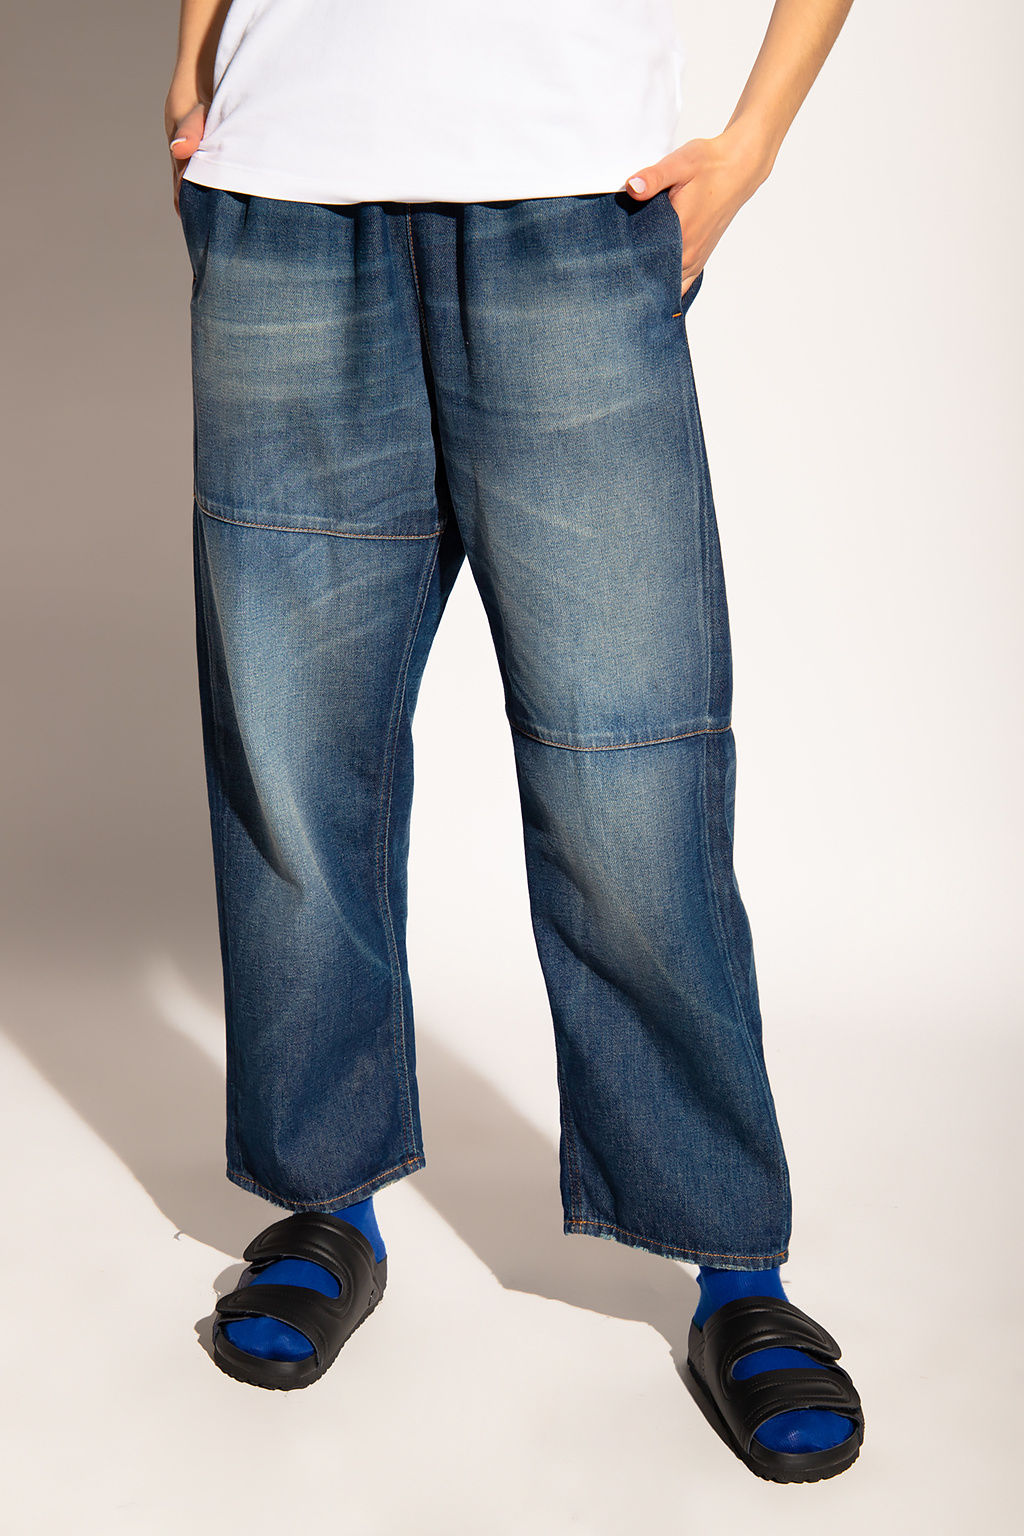 MM6 Maison Margiela Jeans with elastic waistband